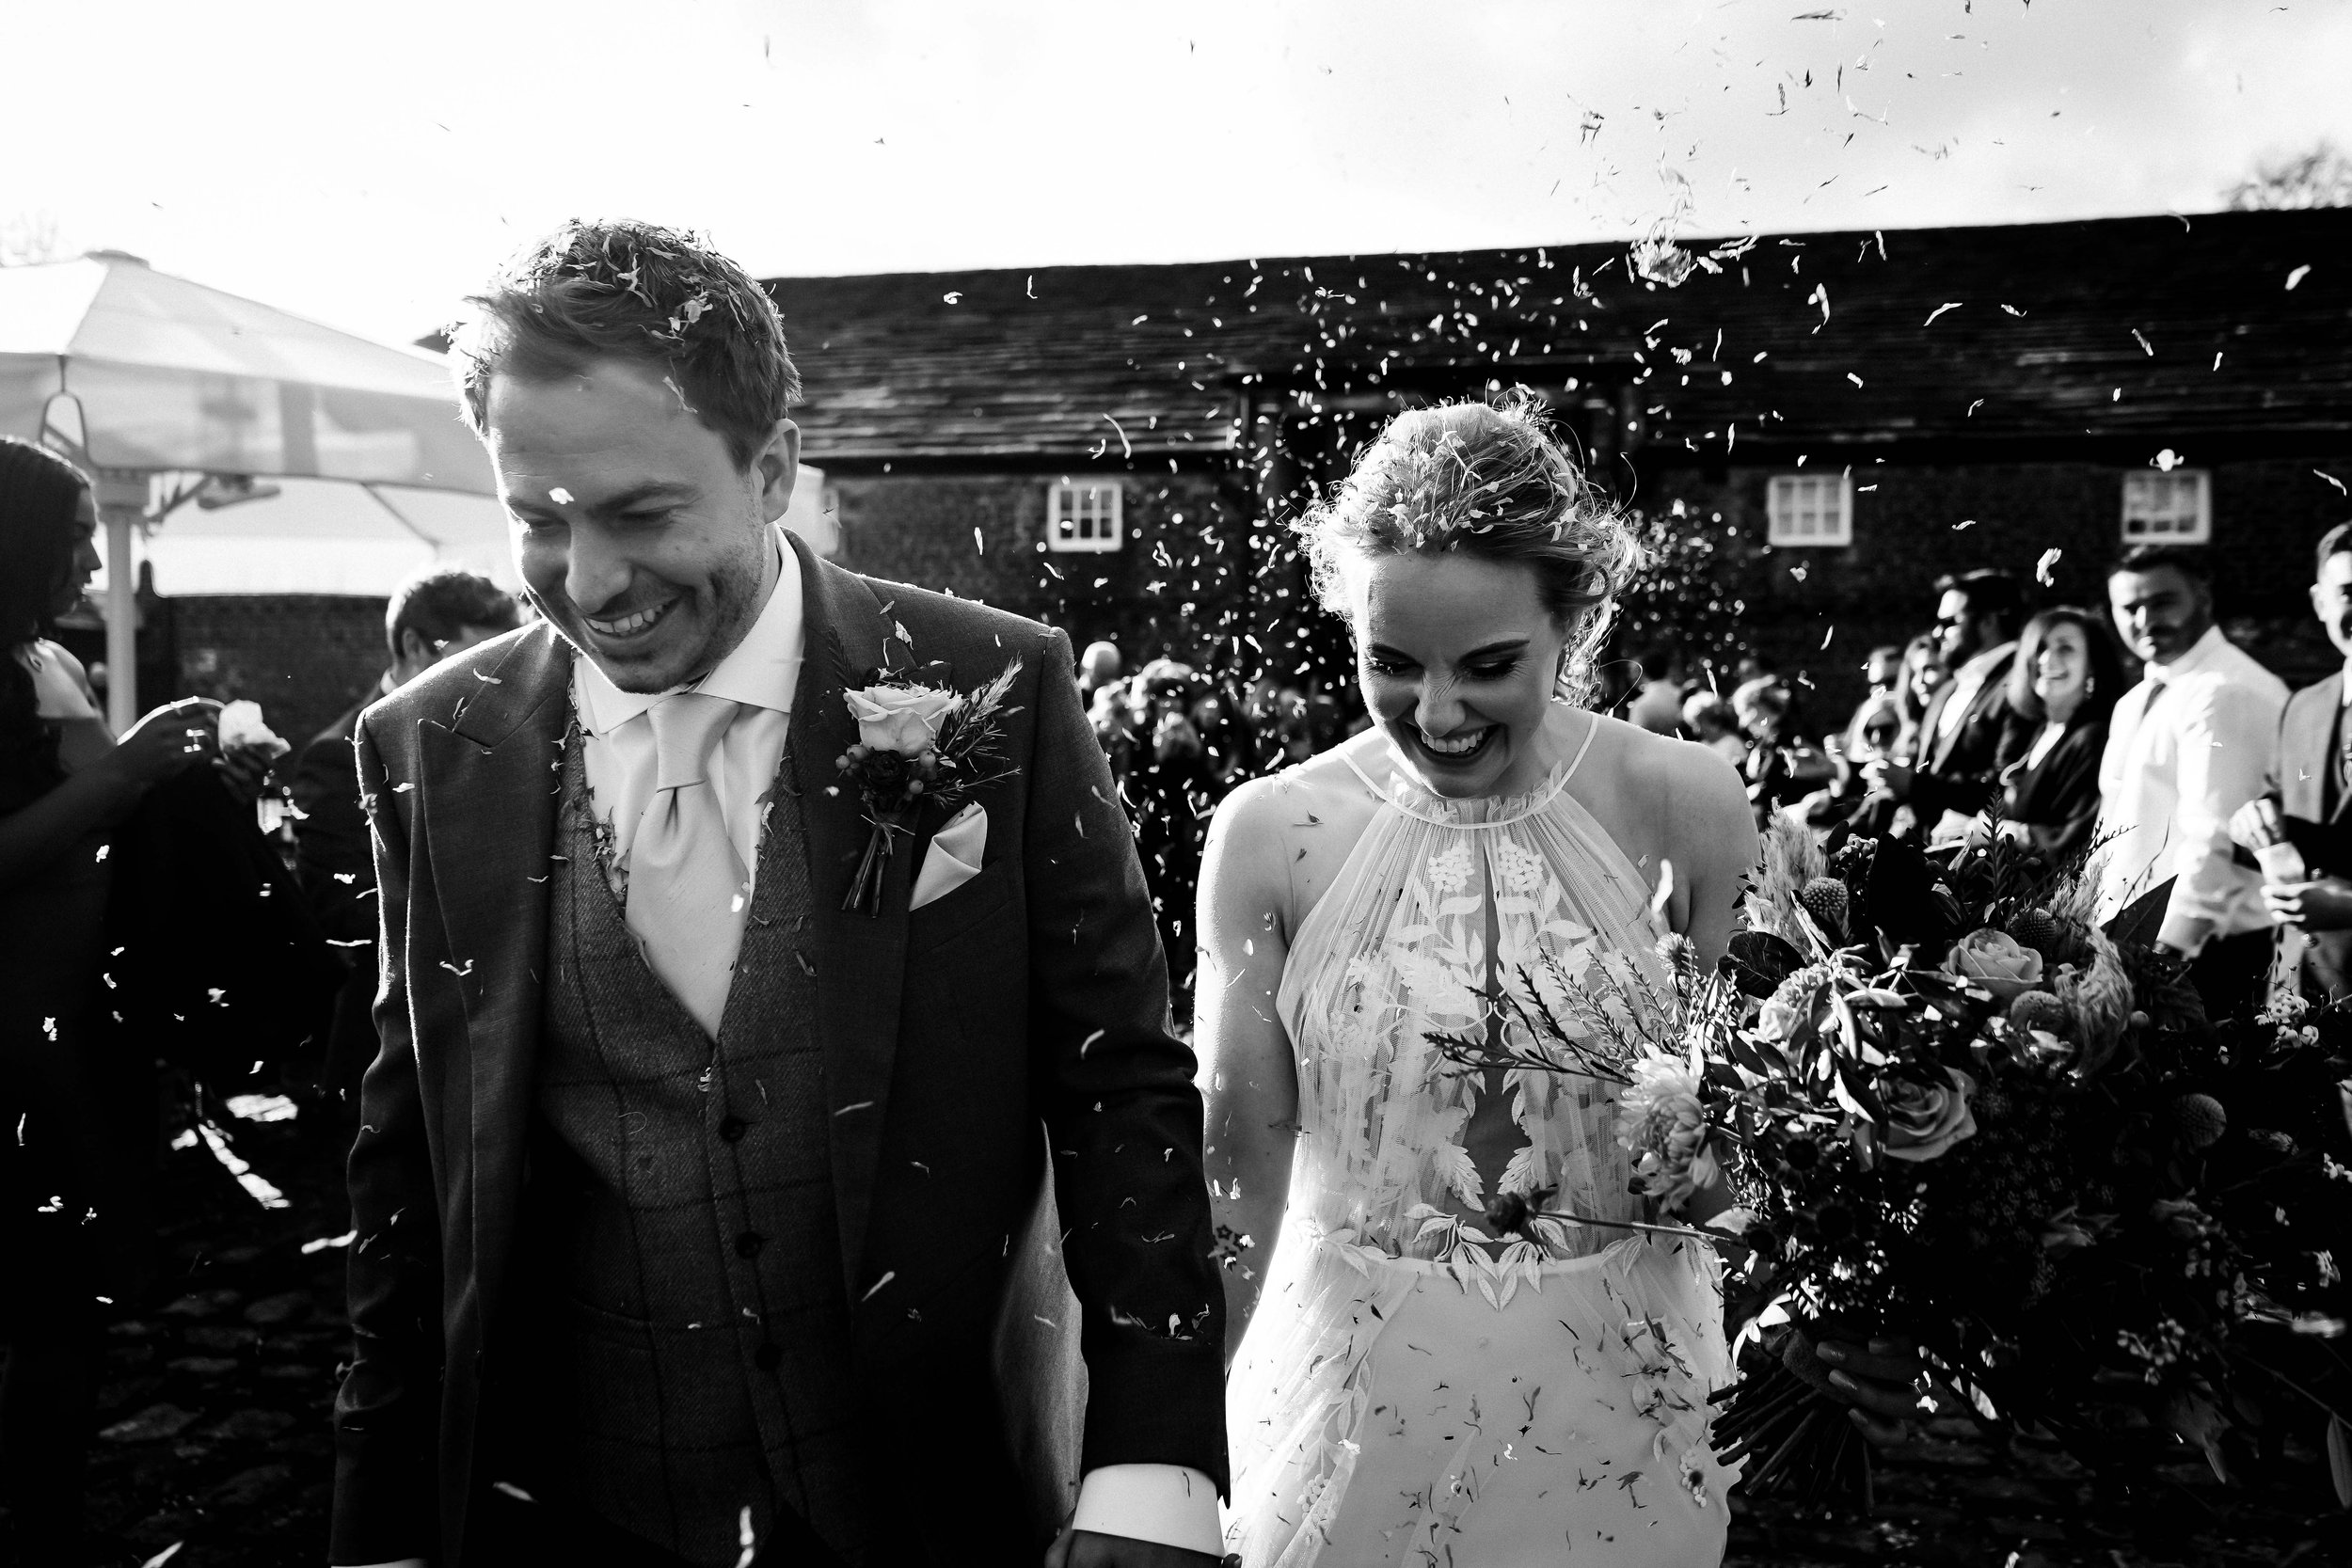 Meols Hall Wedding Photographer based in Lancashire North West England photography - 019.jpg